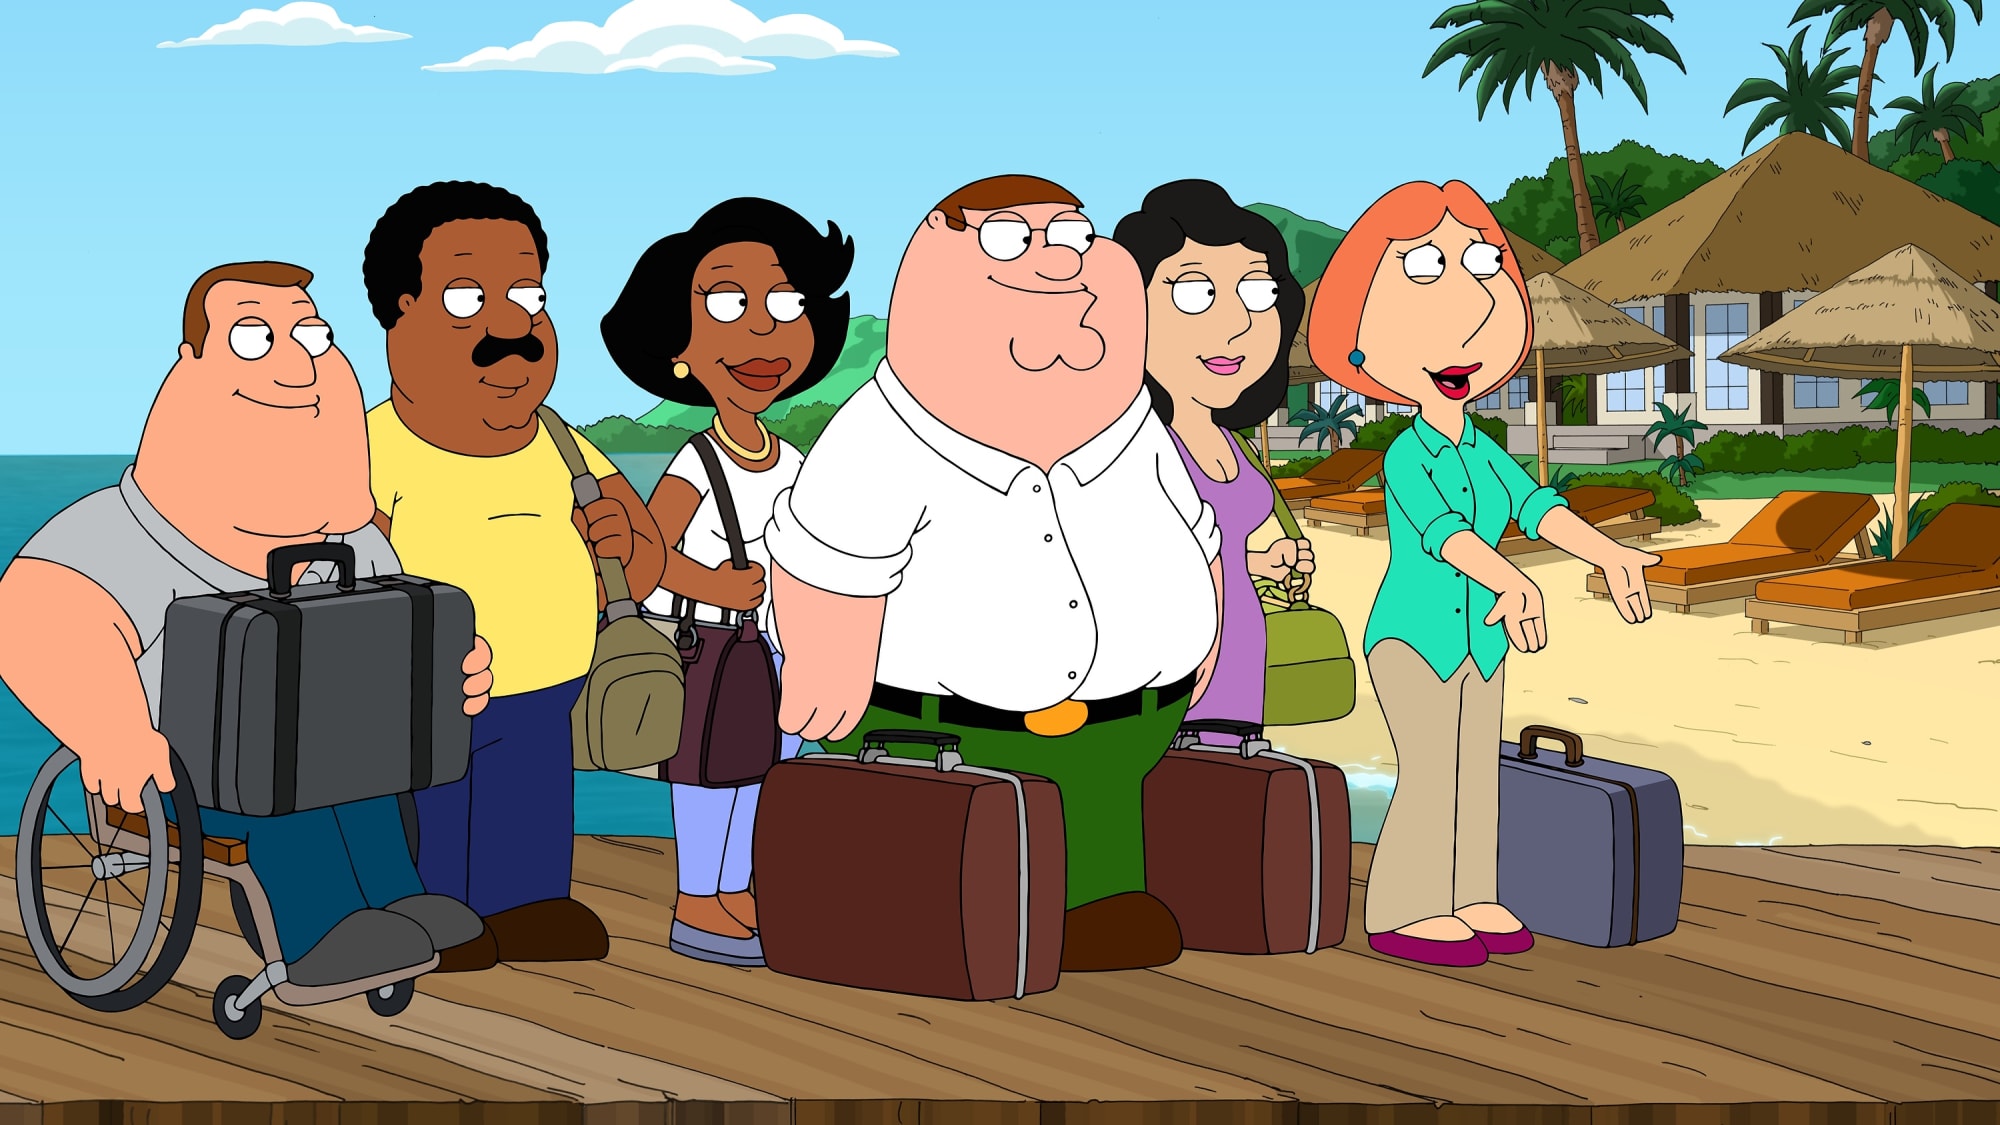 Family Guy won't parody Star Wars: The Force Awakens